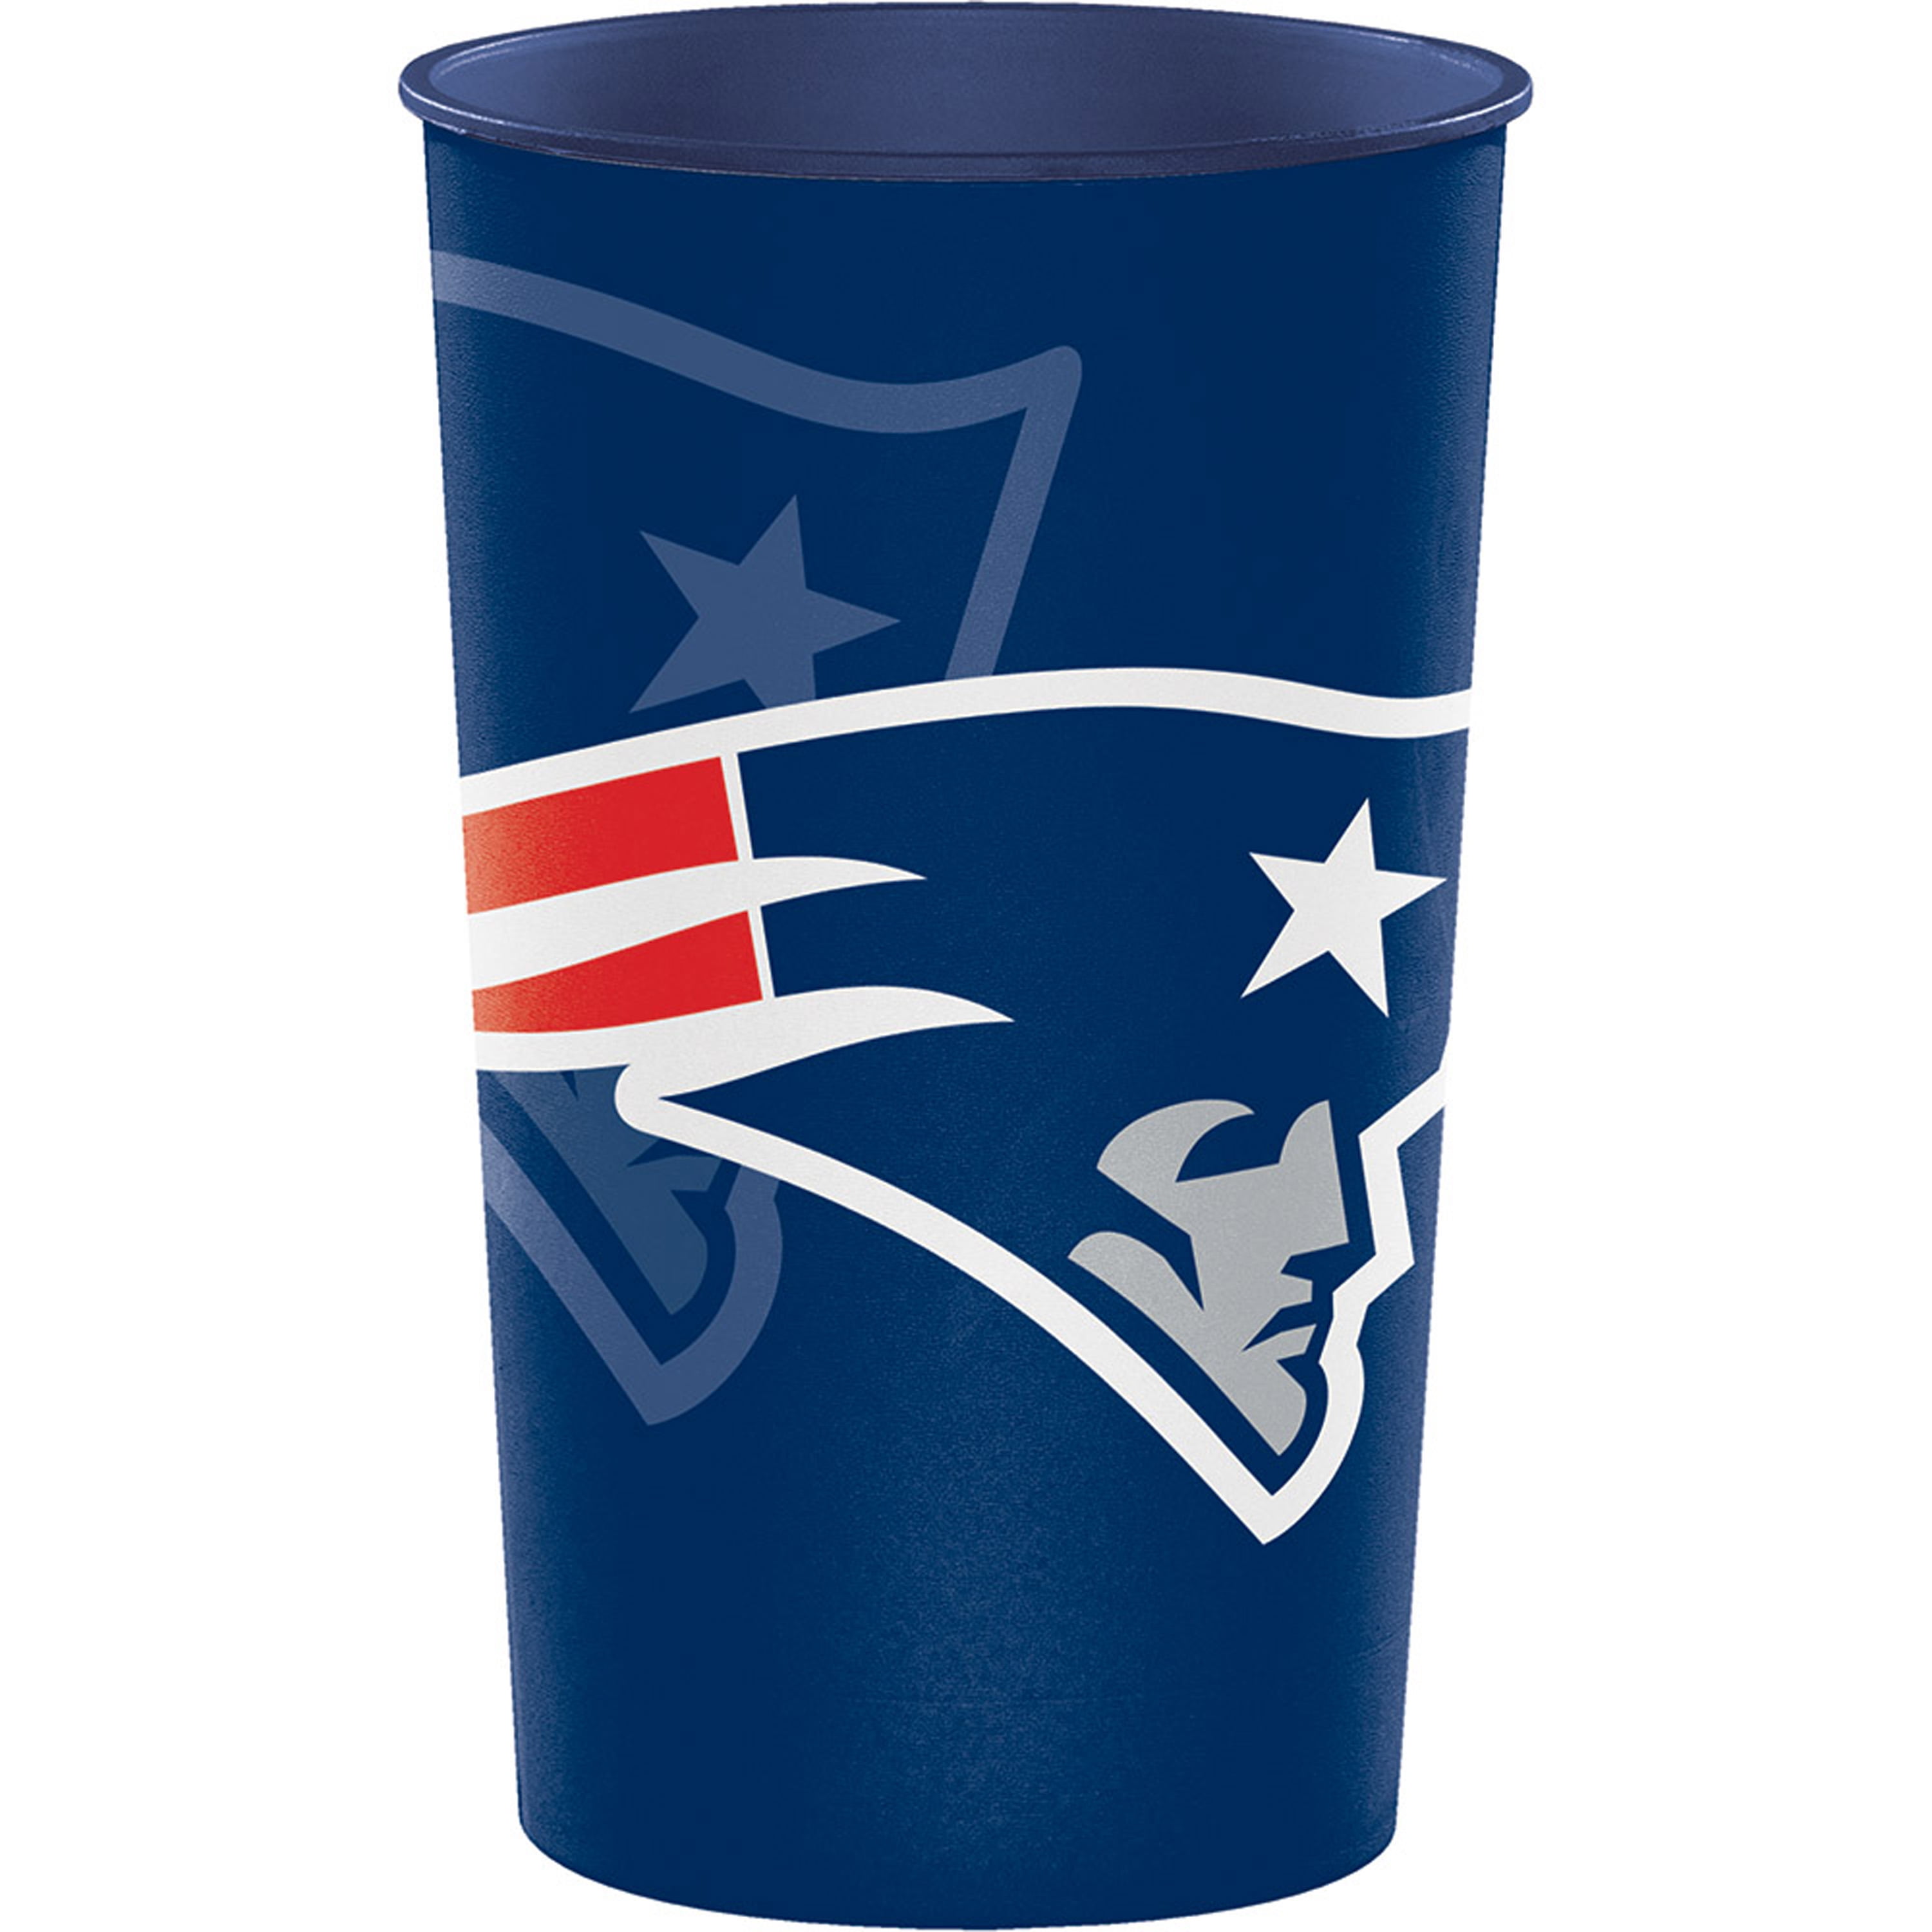 Nfl New England Patriots Souvenir Cups, 8 count